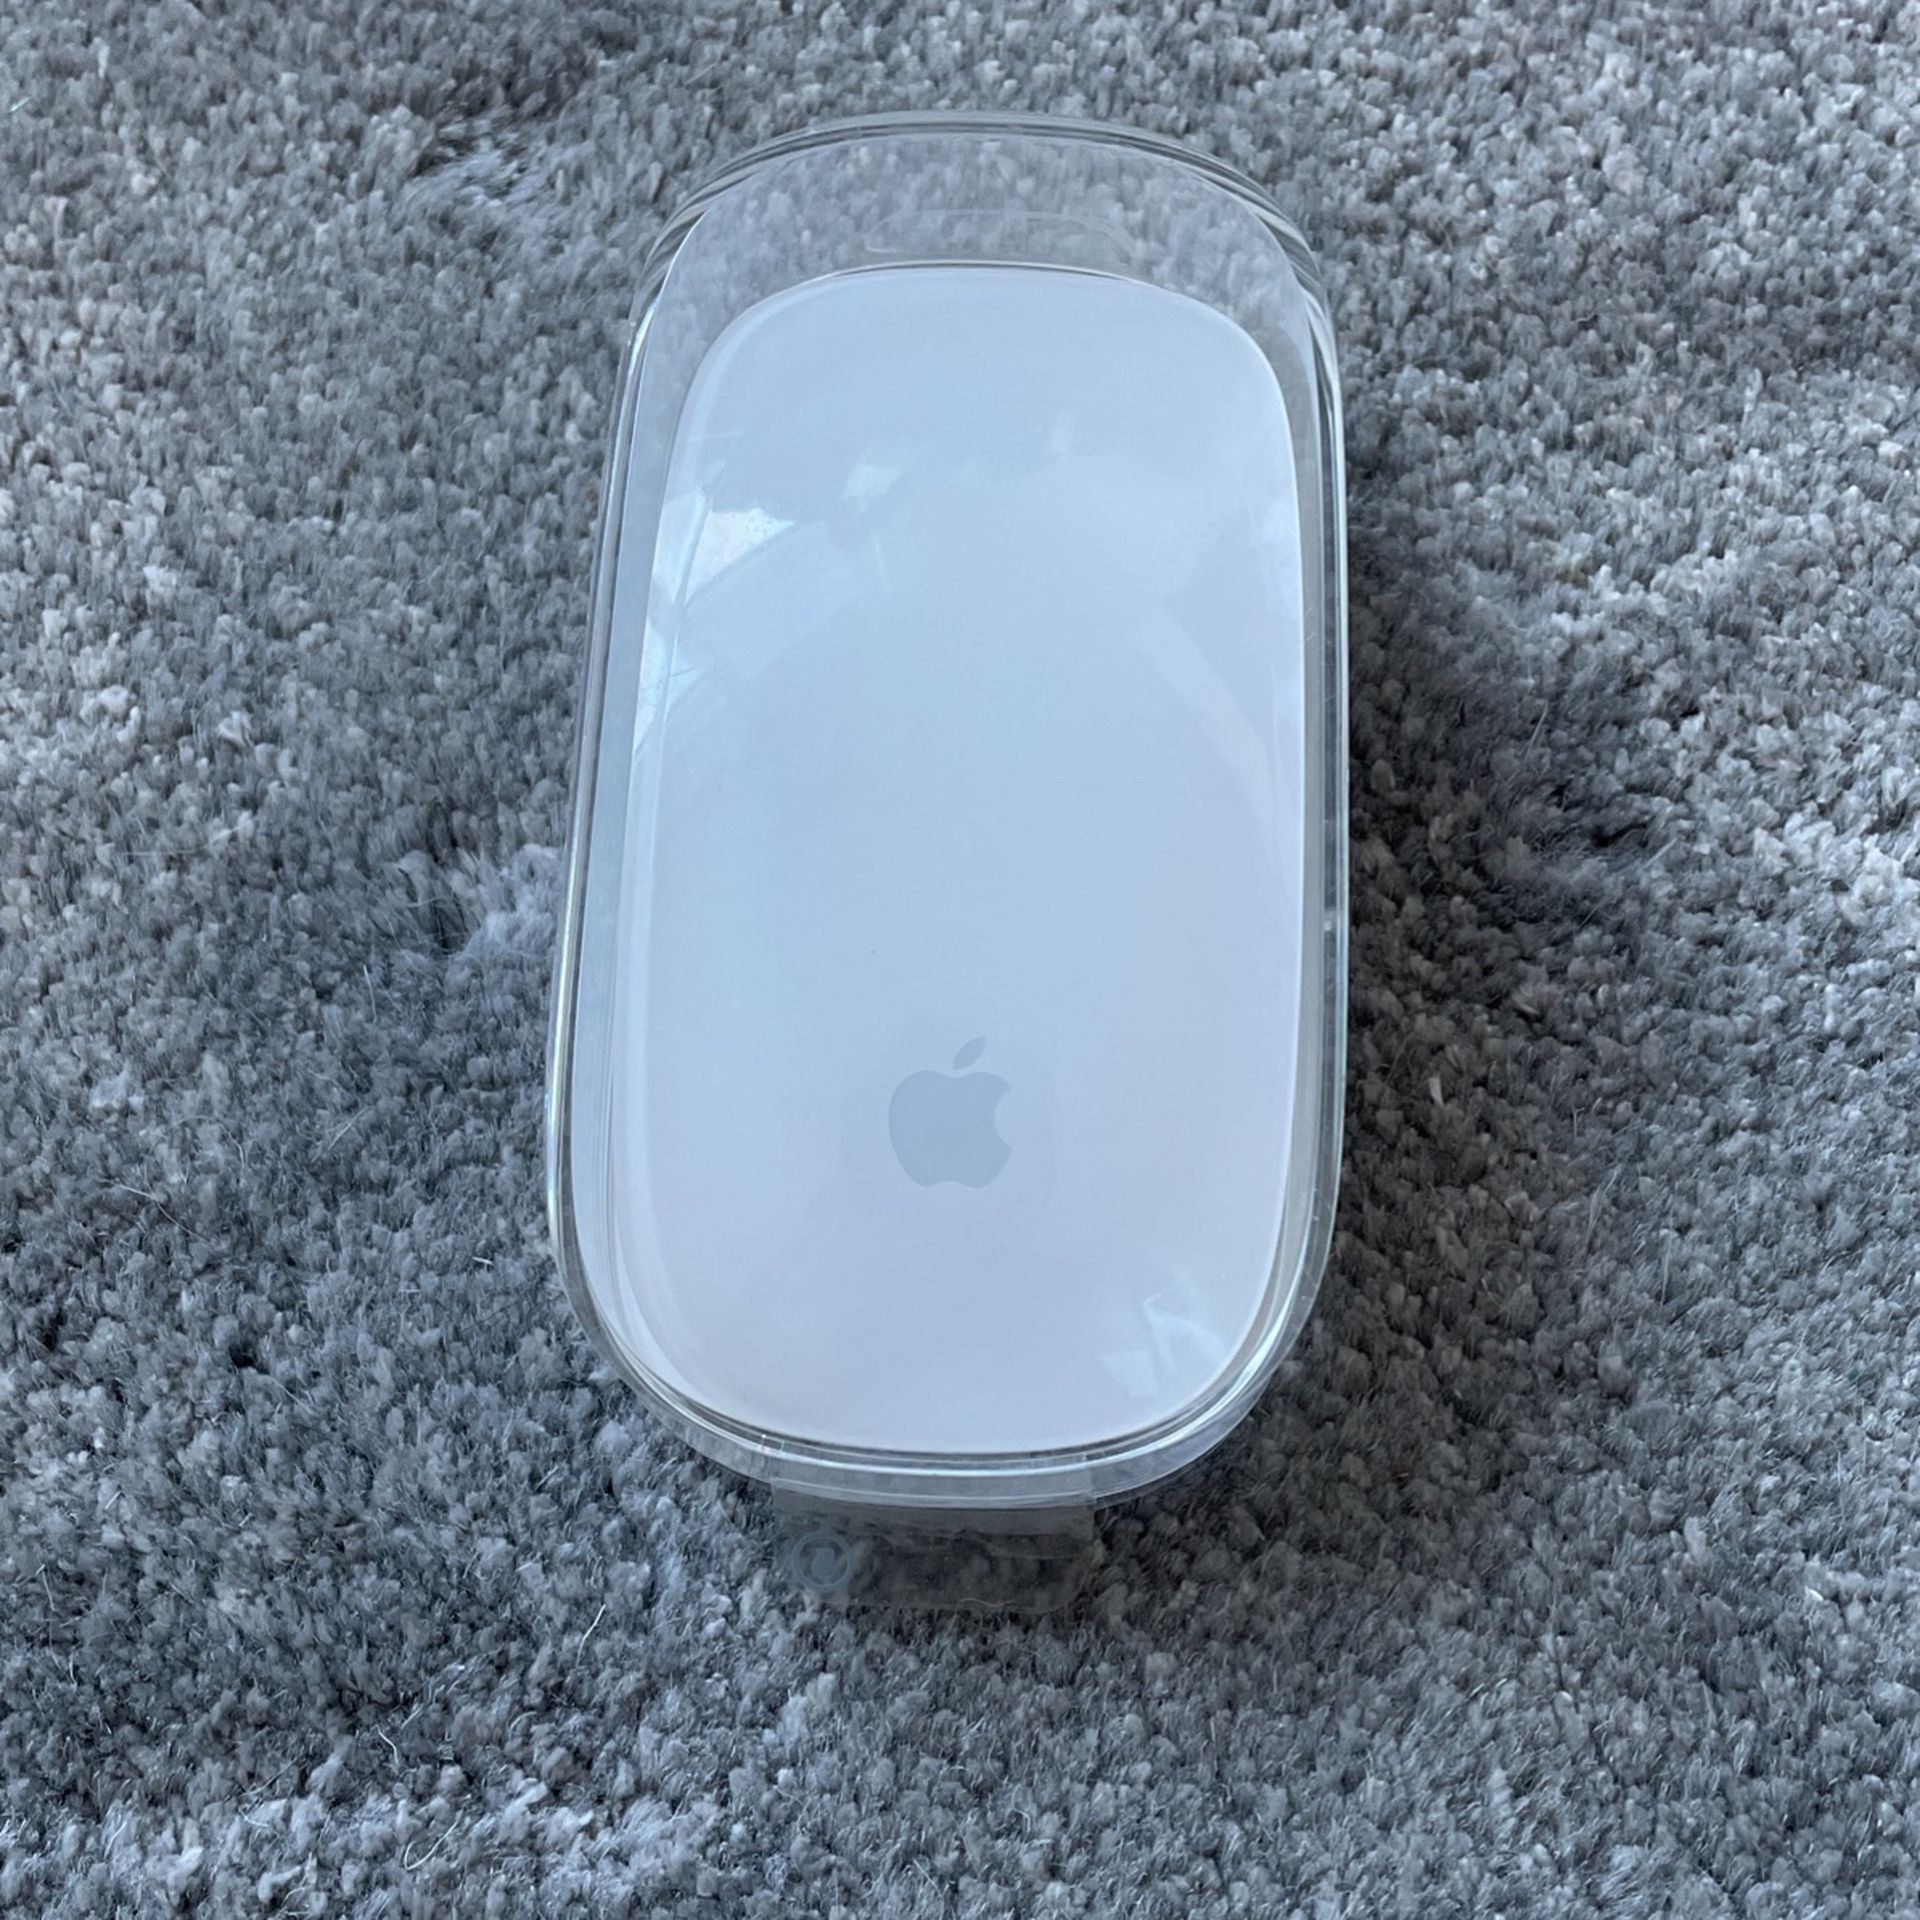 Apple Wireless Magic Mouse A1296 (MB829LLA)